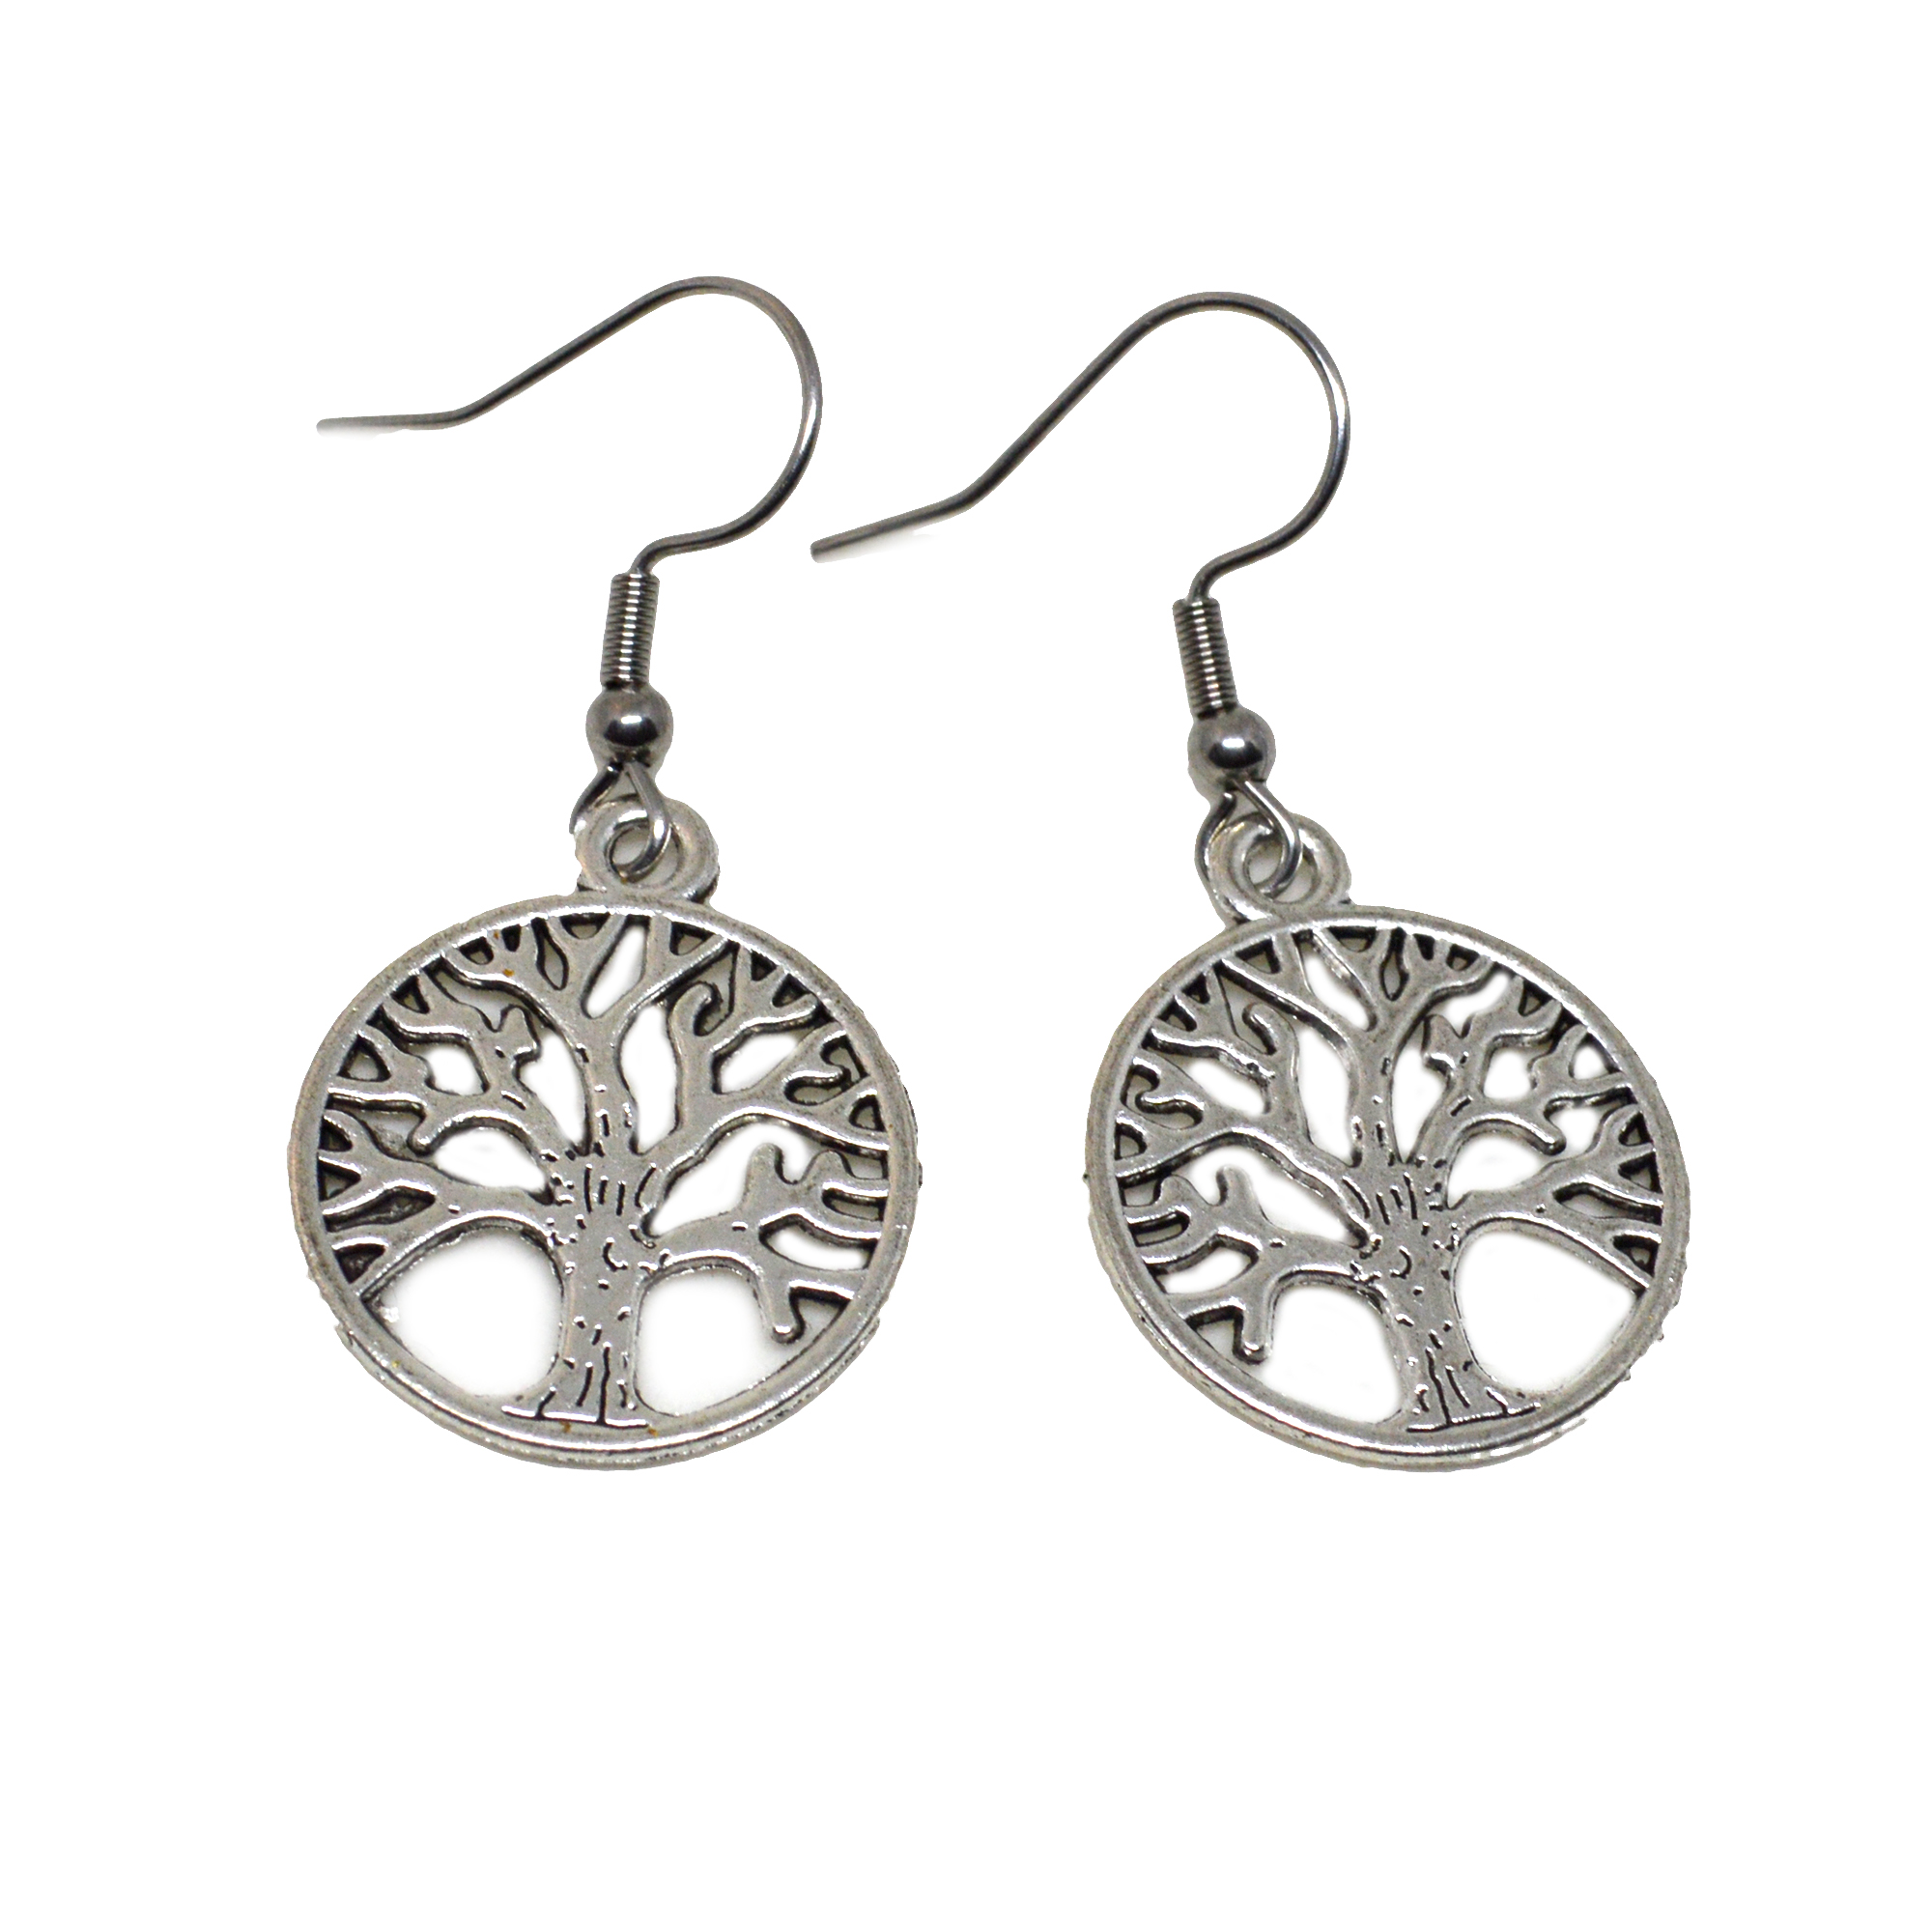 small tree of life earrings